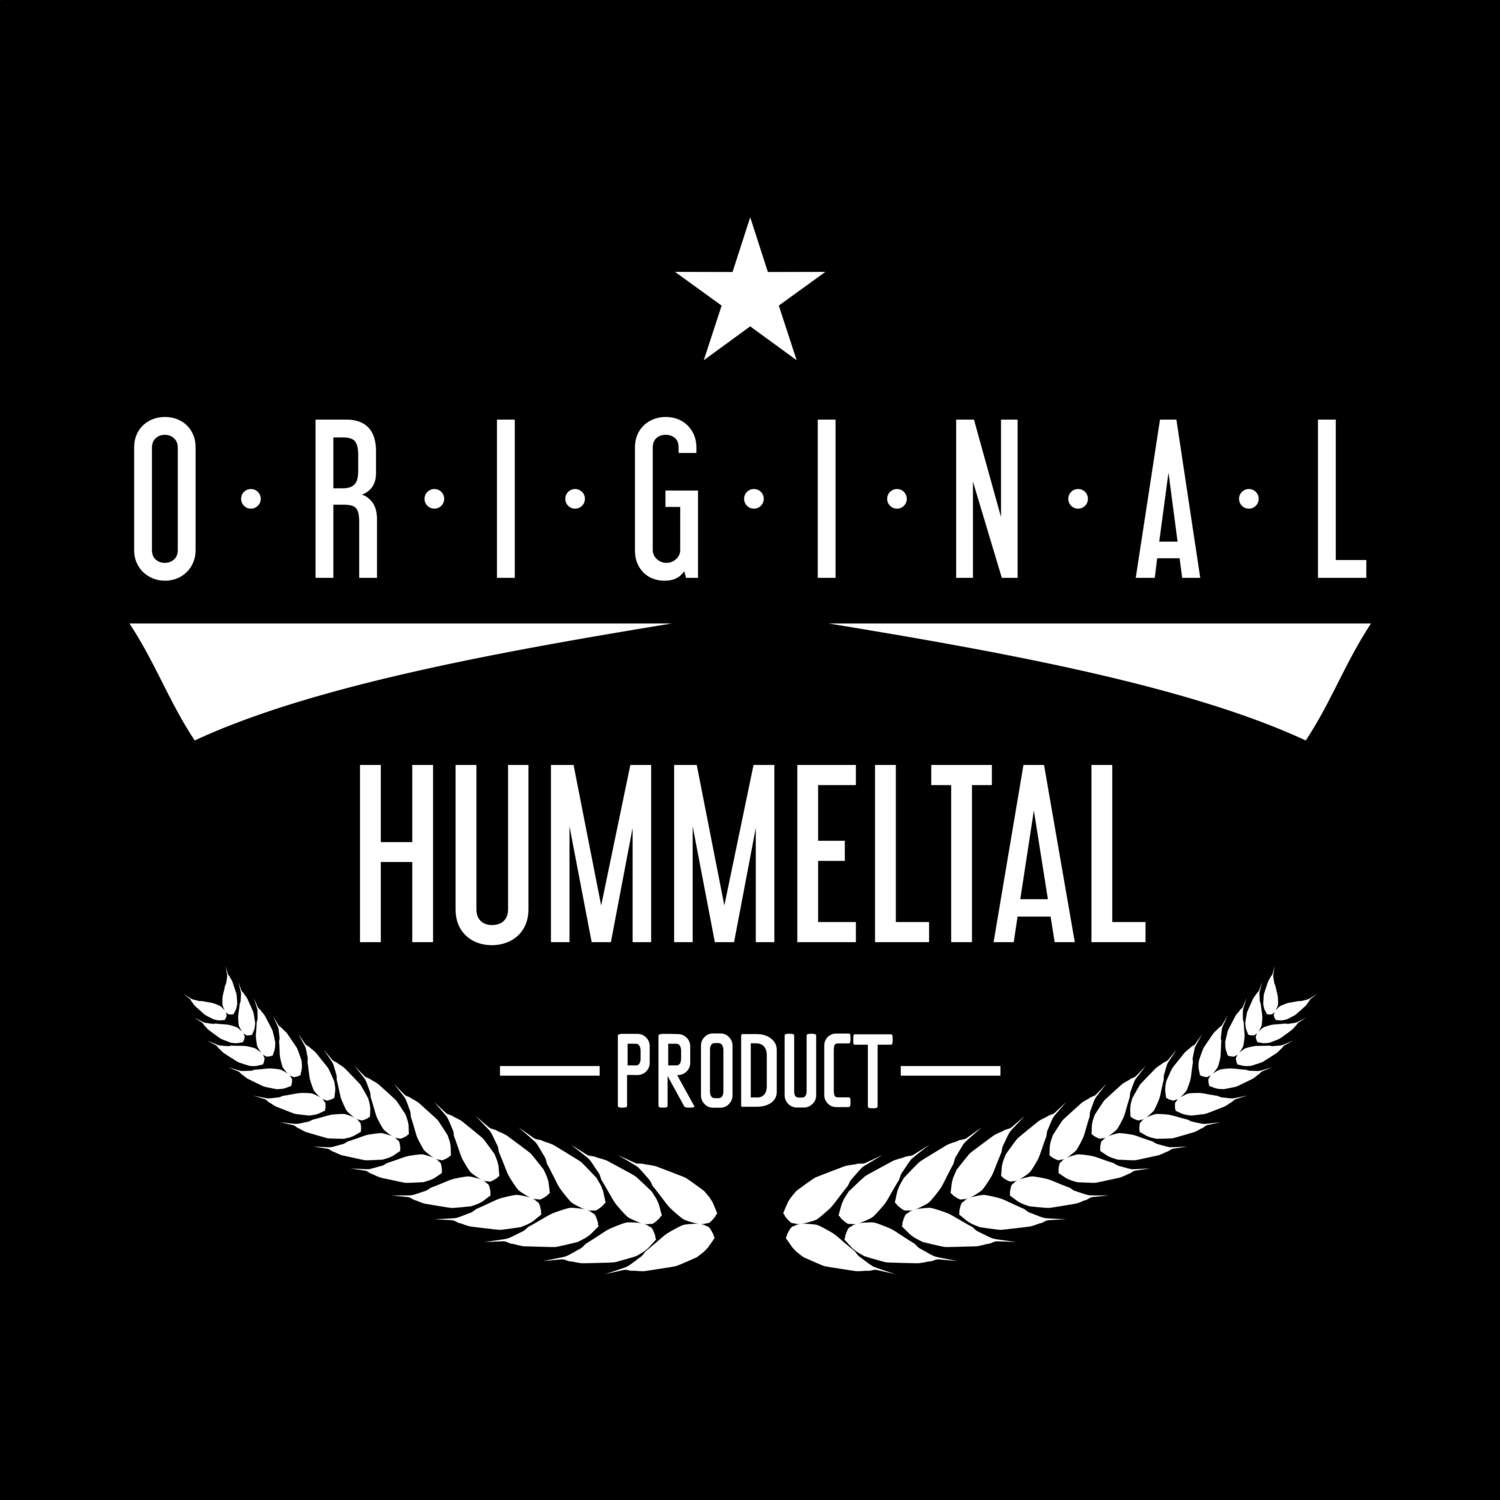 Hummeltal T-Shirt »Original Product«